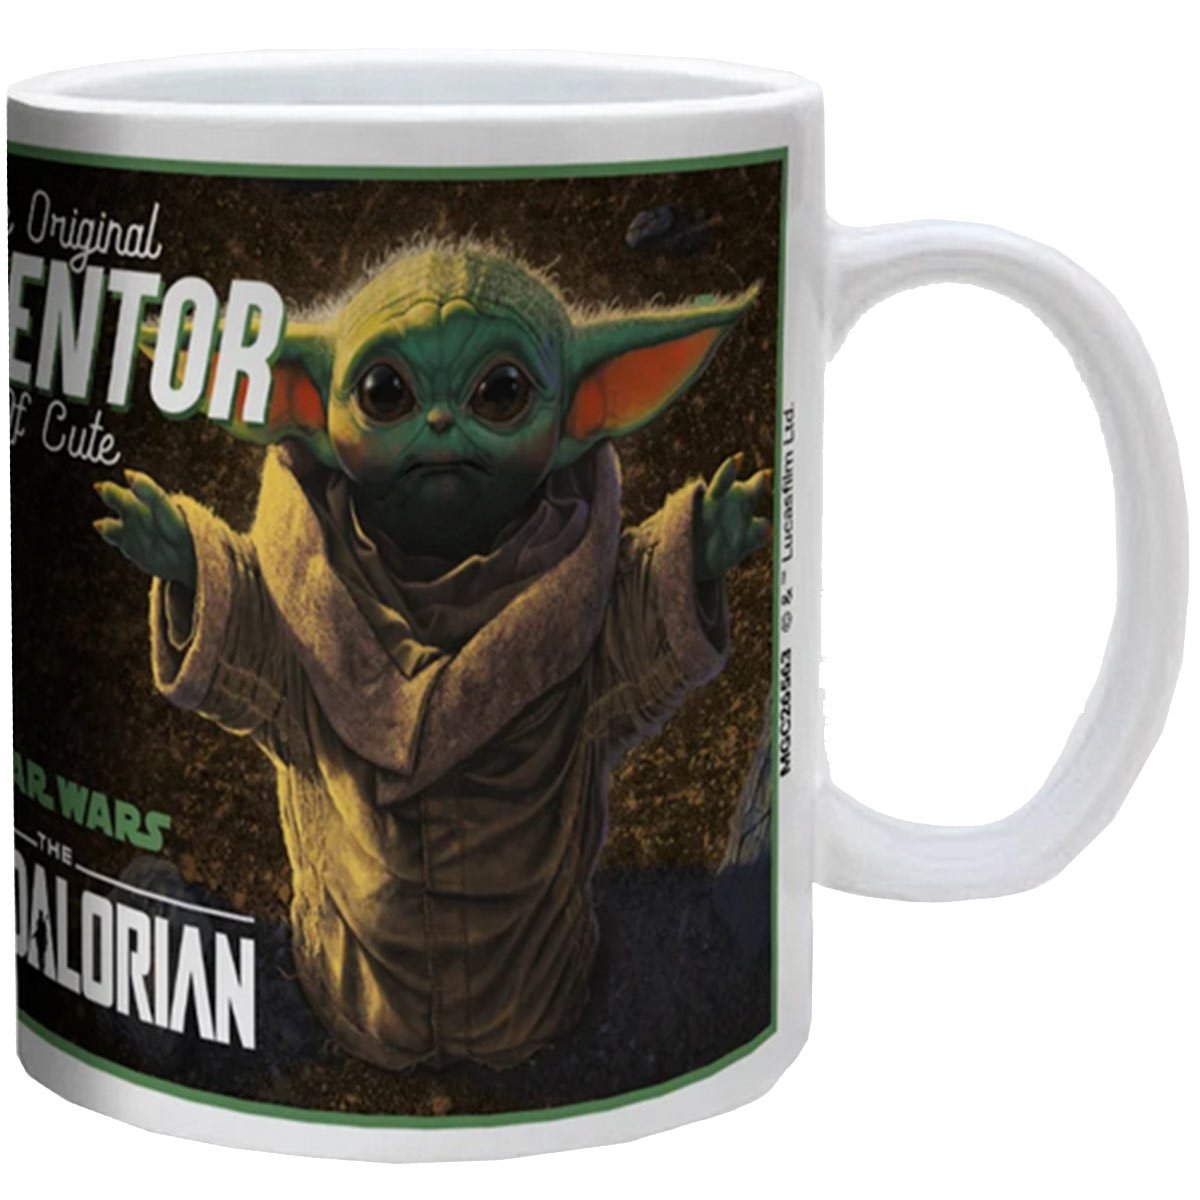 Star Wars: The The Cute Mandalorian oz. Of Original 11 Mug Inventor